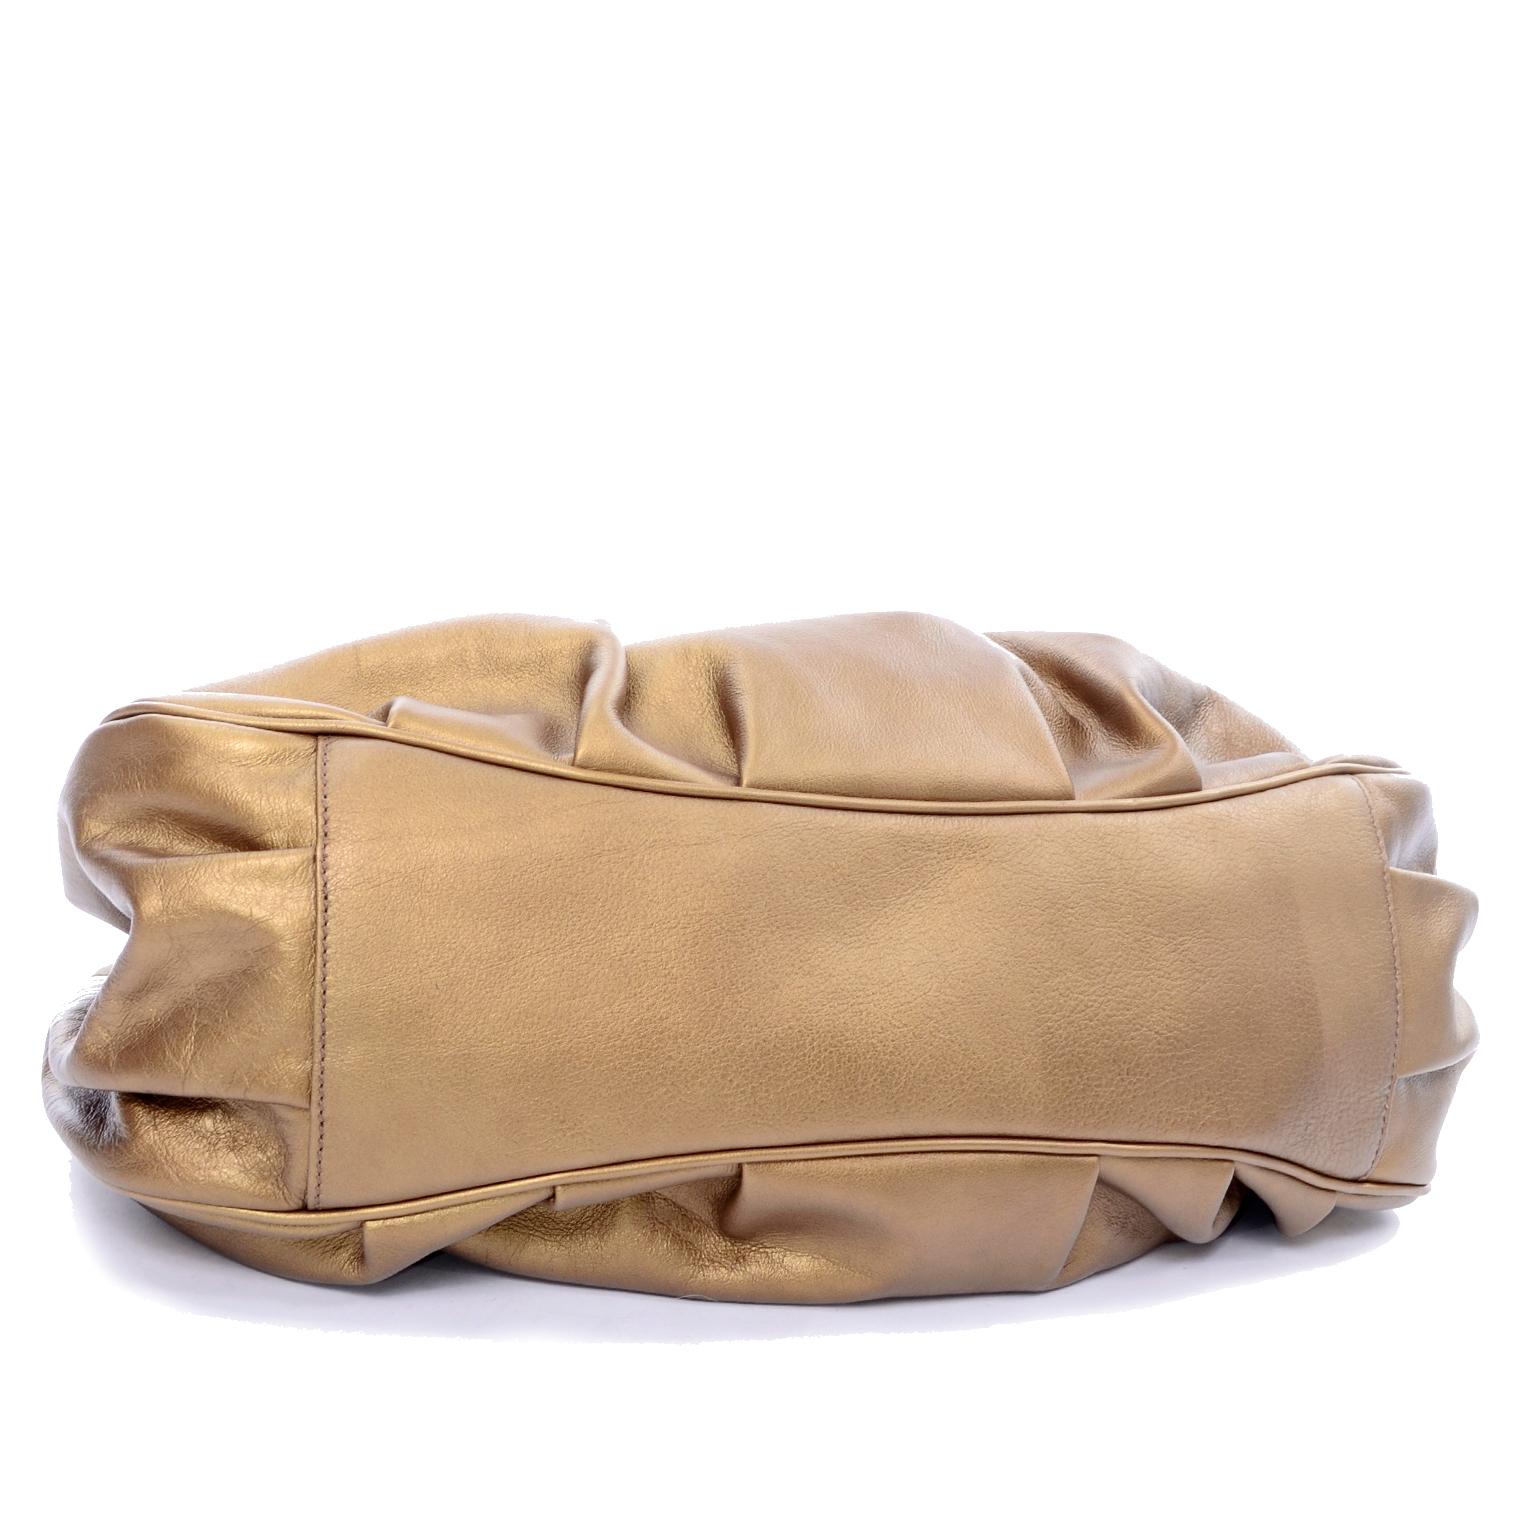 Women's Large Fendi Bag in Bronze Leather Borsa Mia Handbag w/ Shoulder Strap & Card